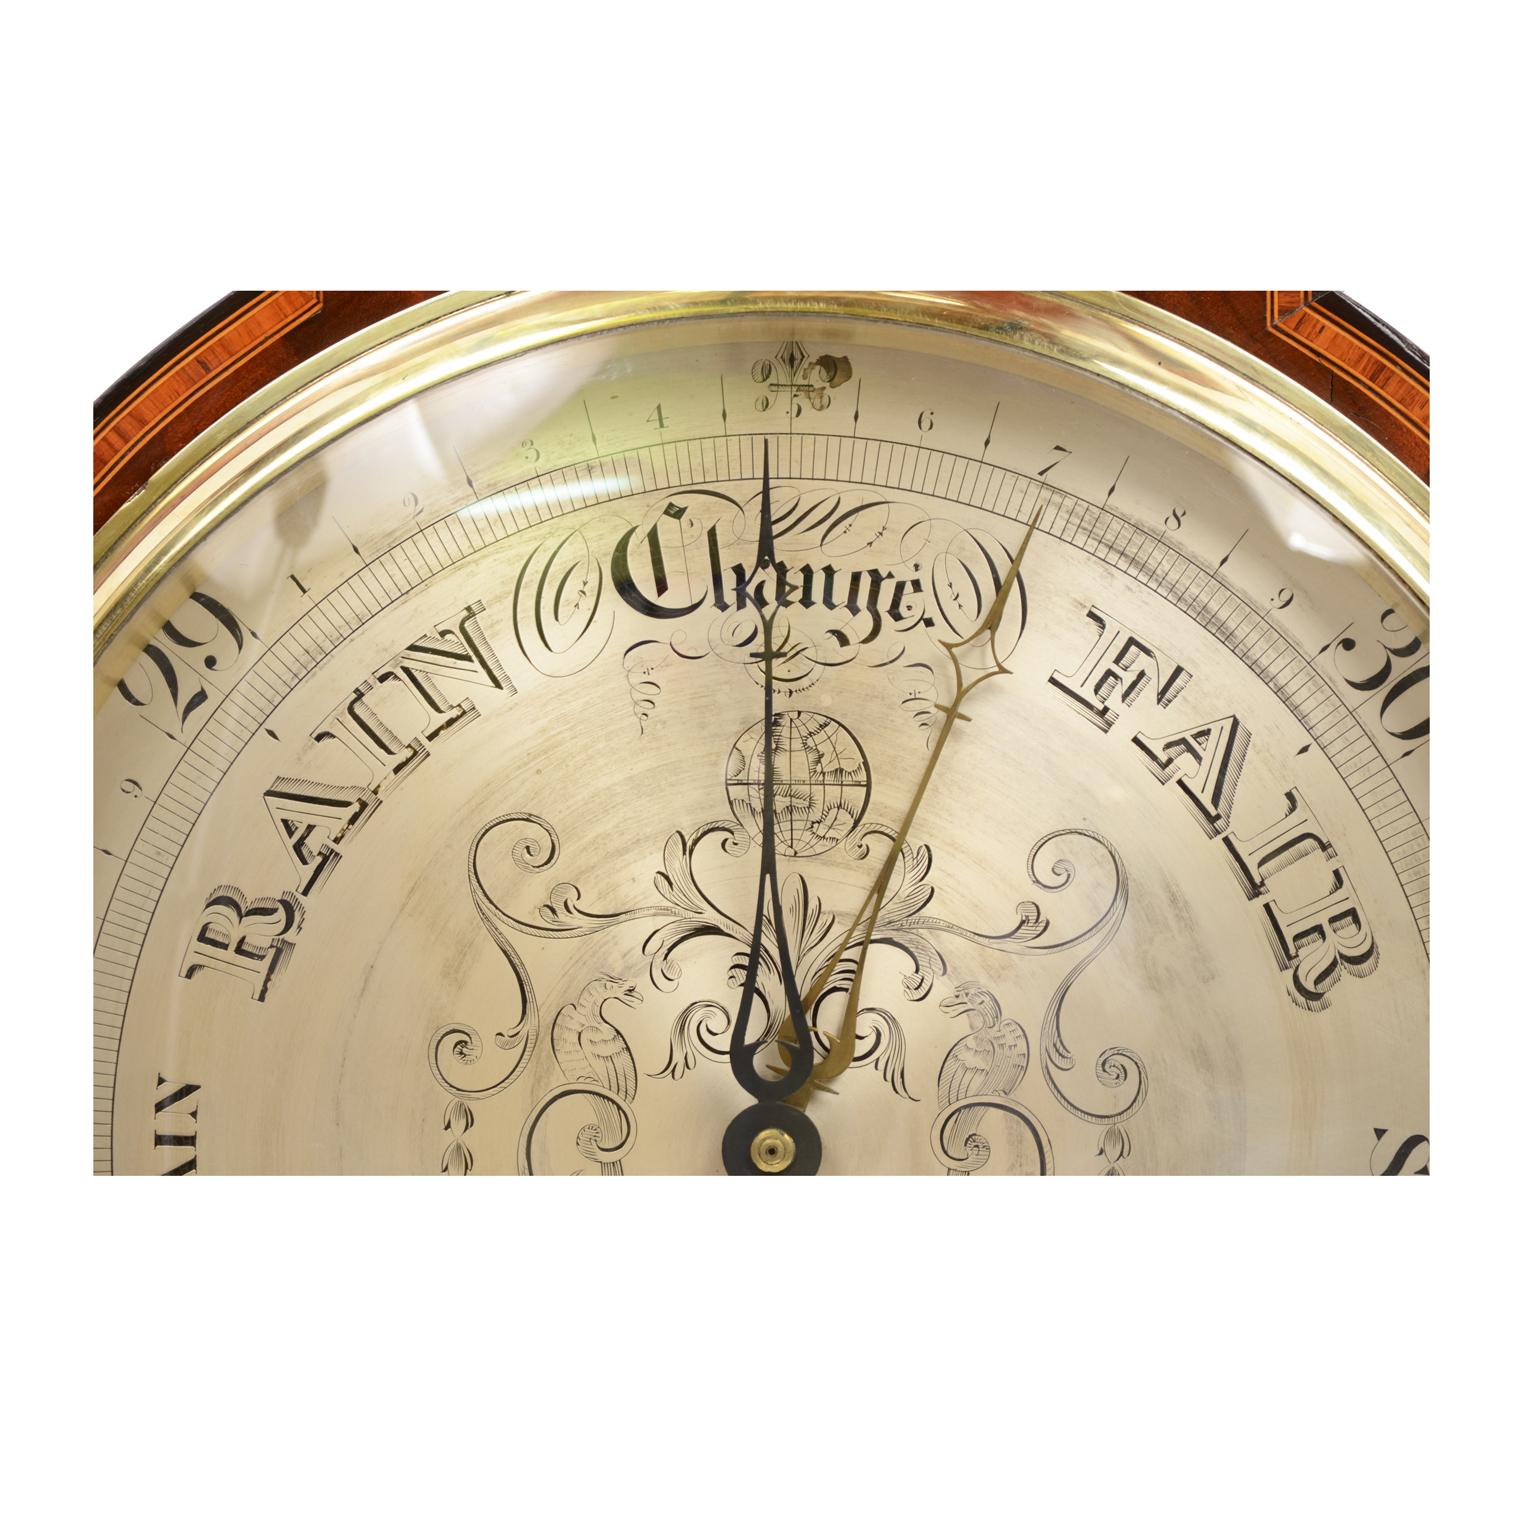 J Walden 1810-20 Mahogany Large clock Barometer Weather Measuring Instrument  14